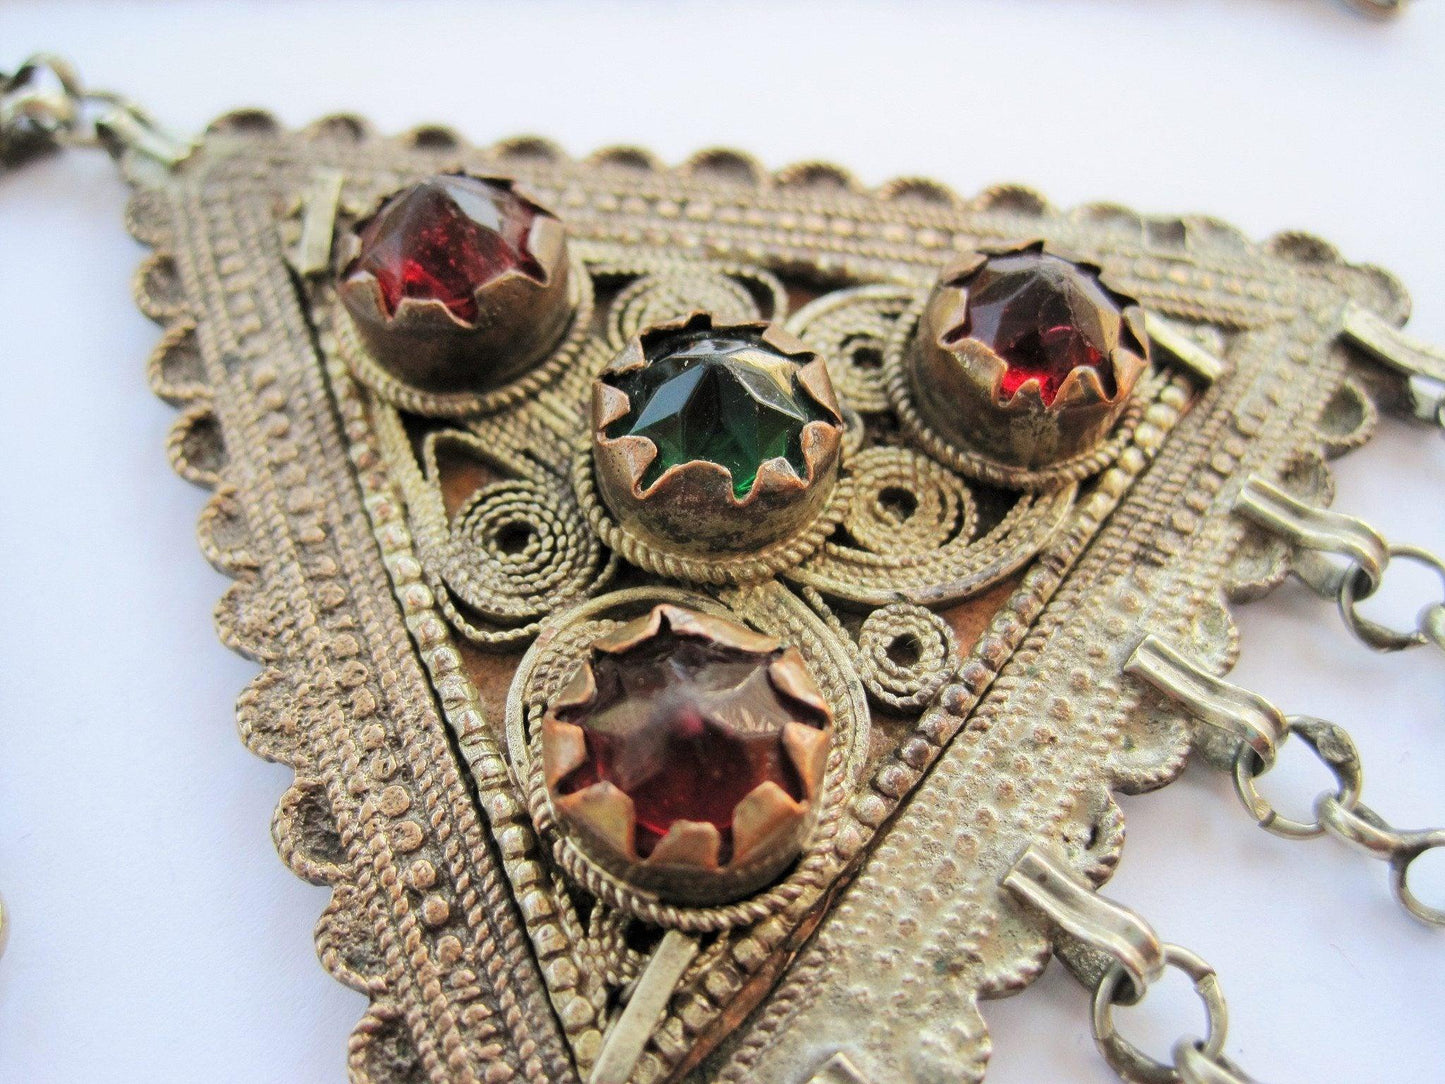 Vintage Ottoman Necklace - Anteeka